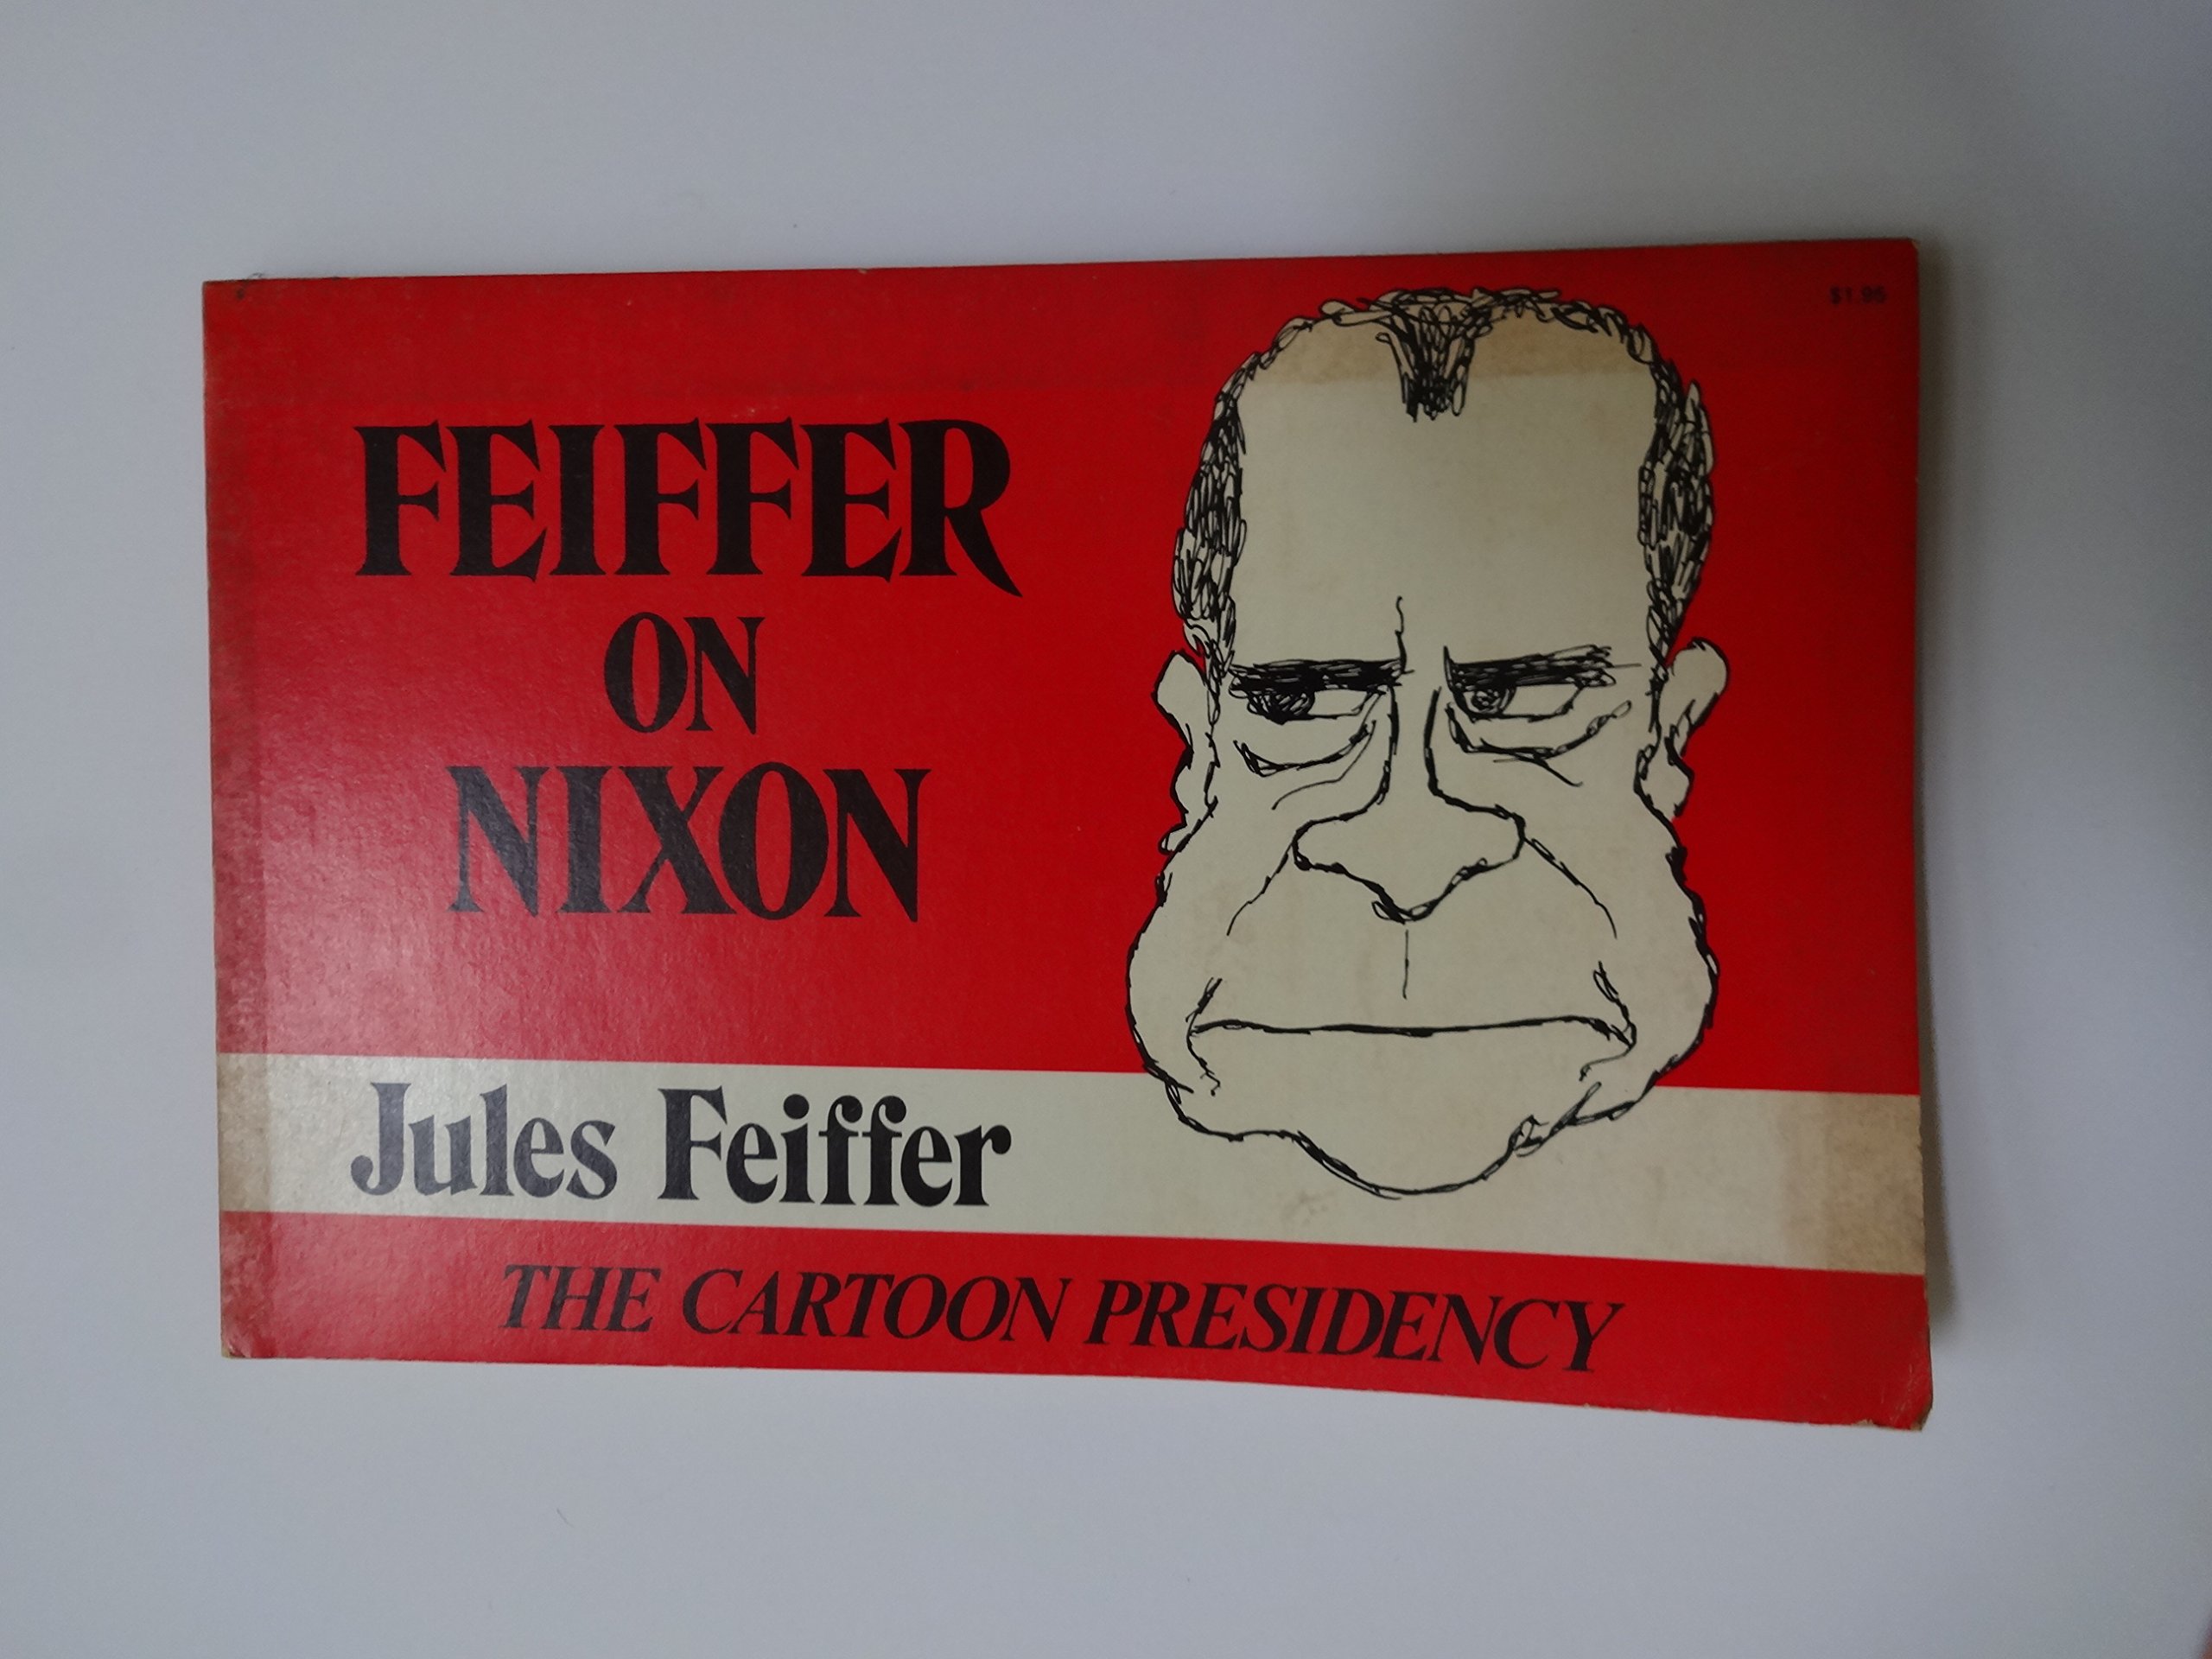 Feiffer on Nixon: The Cartoon Presidency